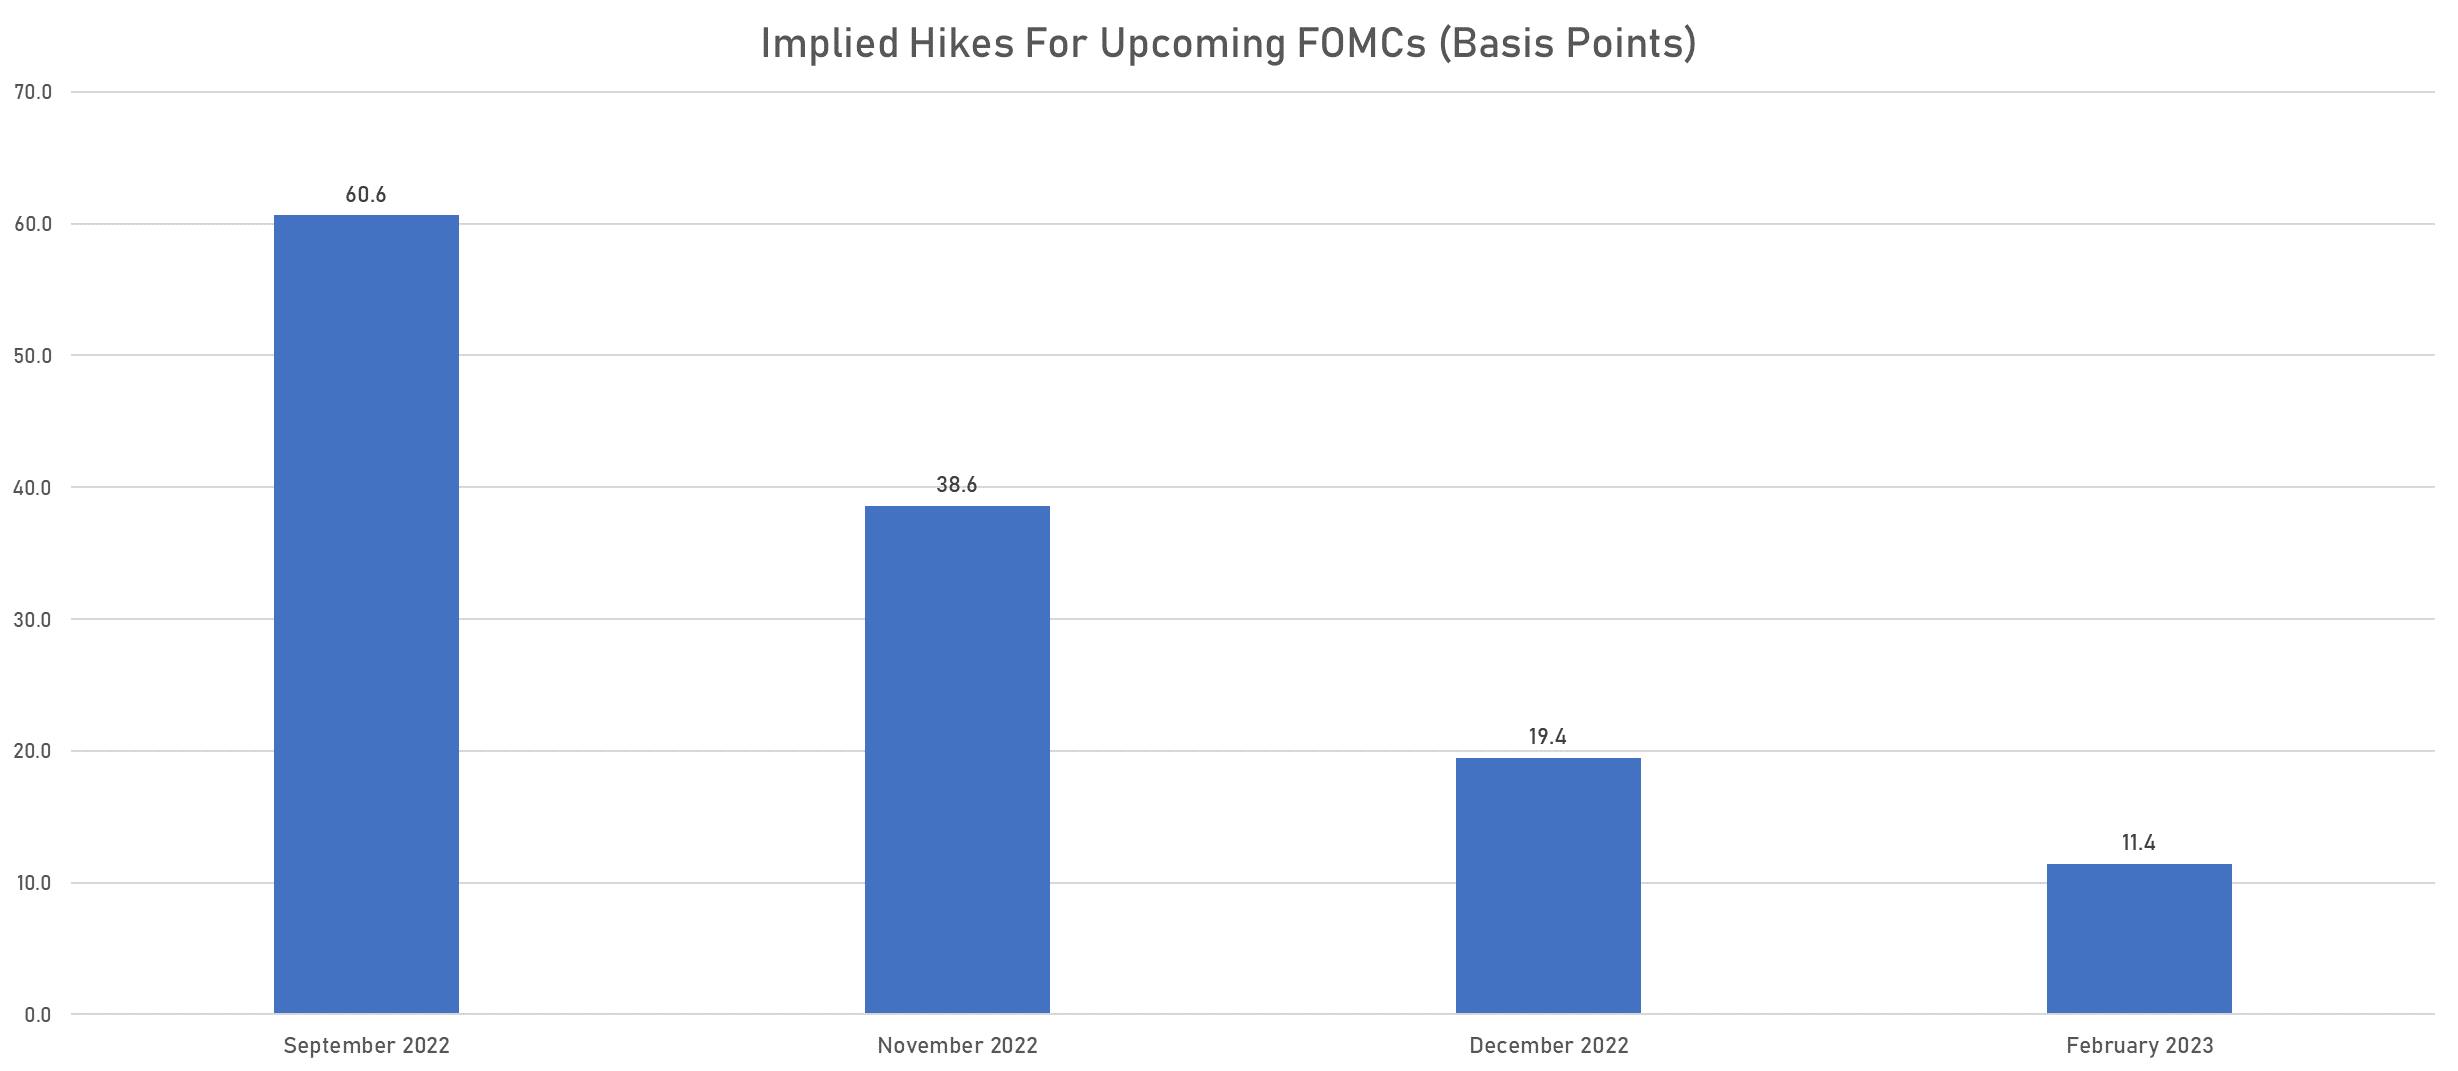 Implied Hikes At Future FOMCs | Sources: phipost.com, Refinitiv data